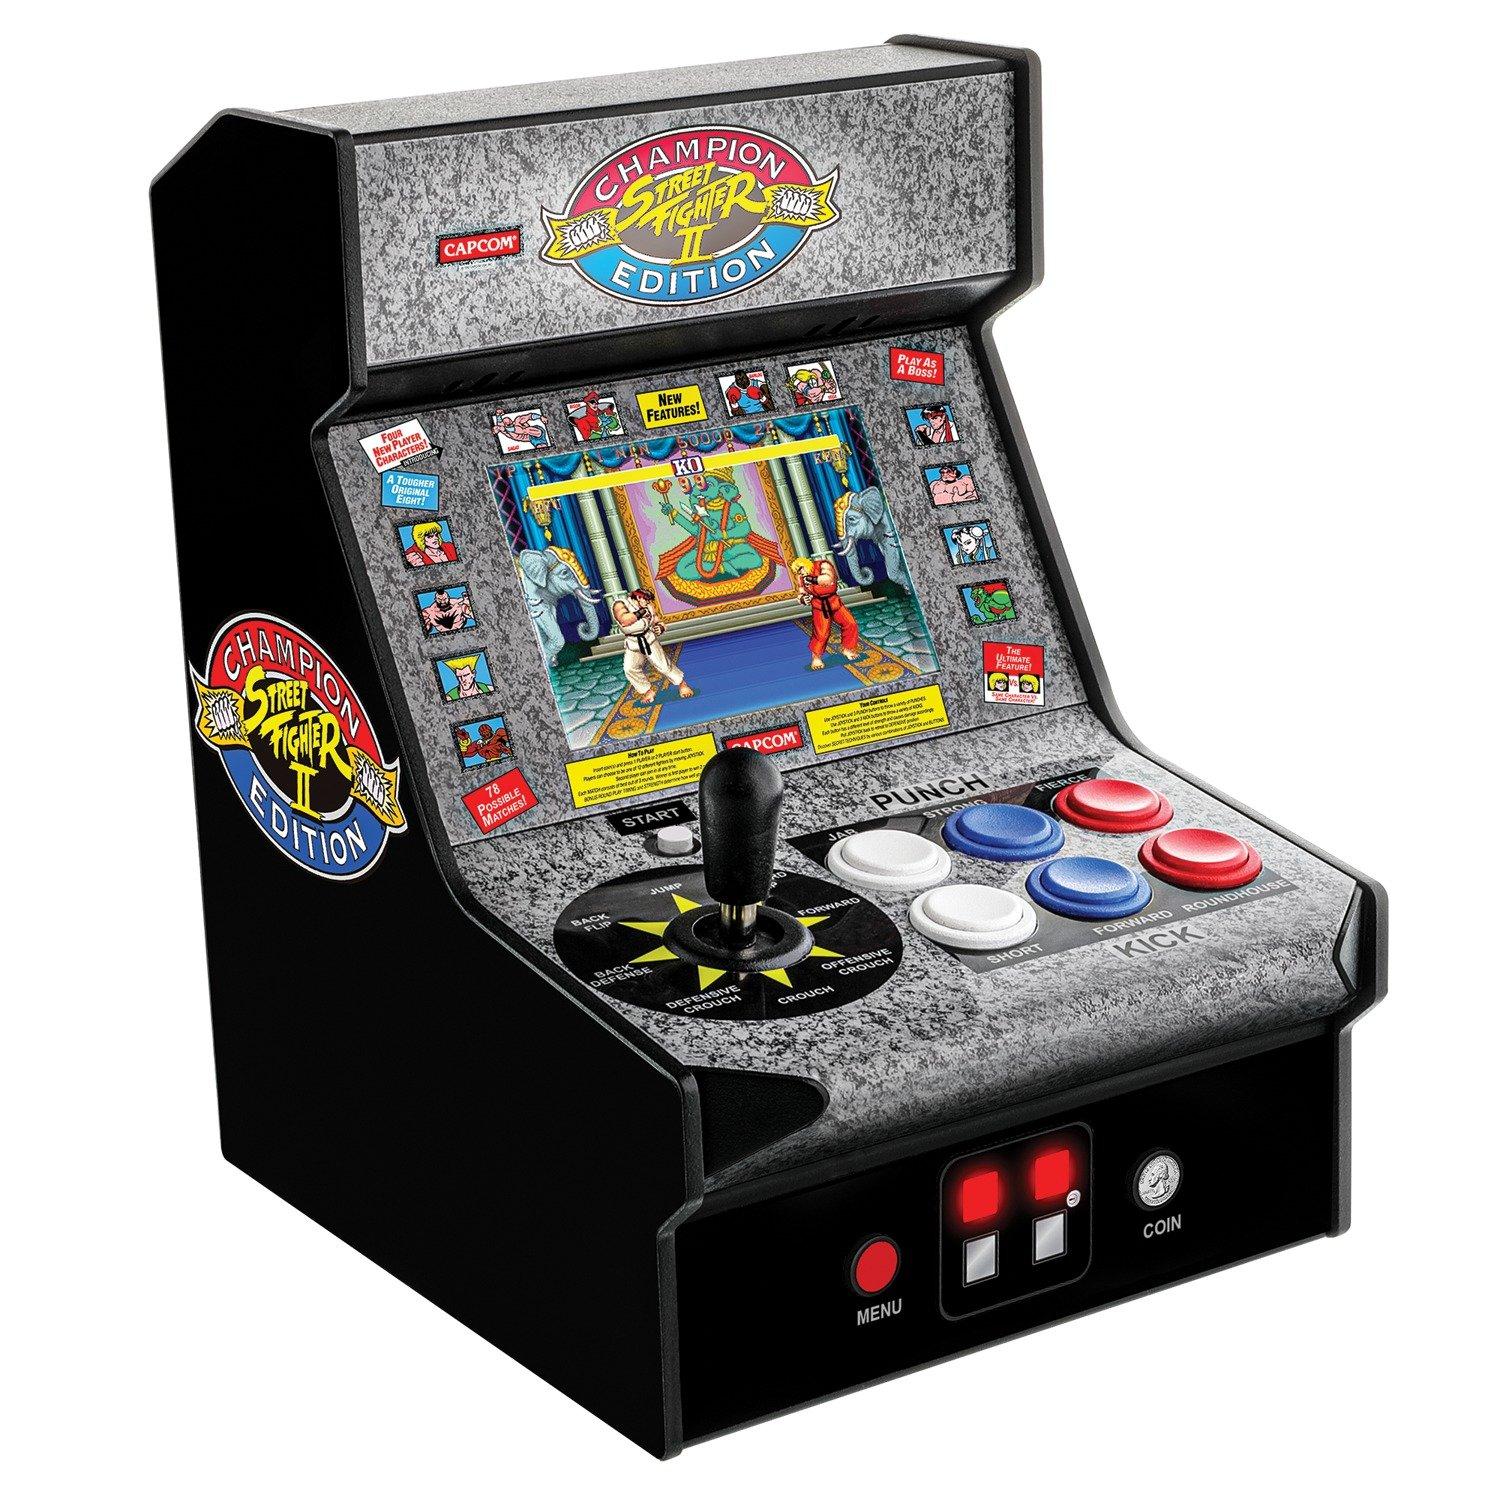 Play Arcade Street Fighter II' - Champion Edition (street fighter